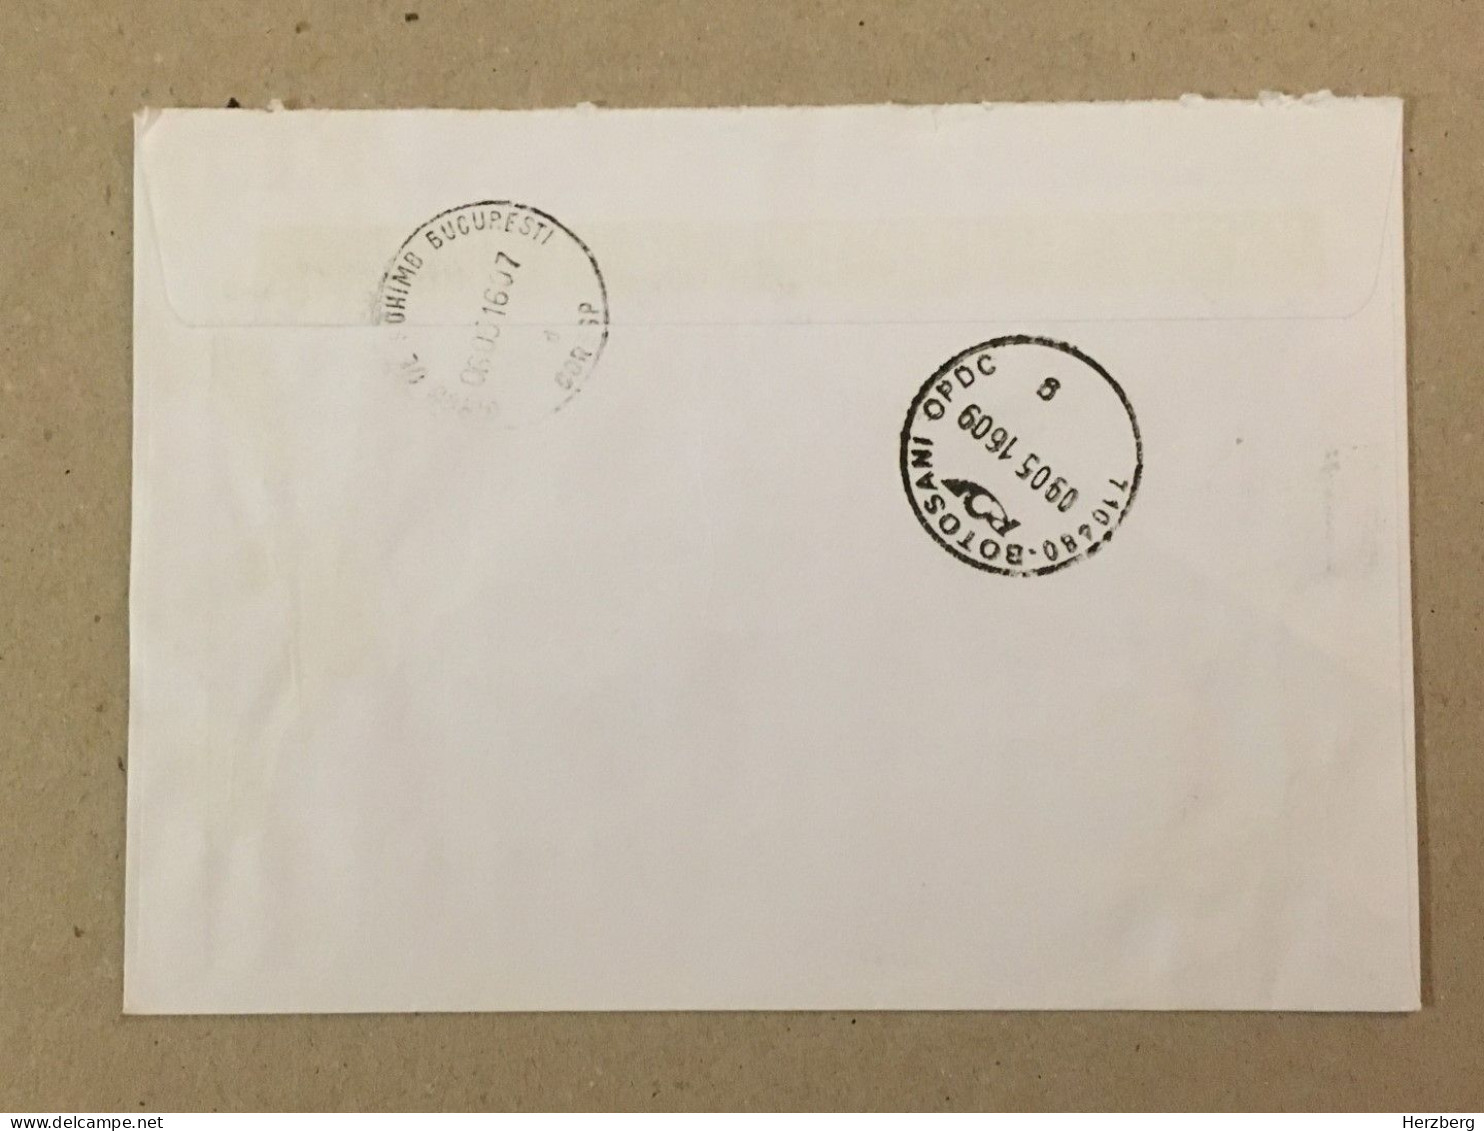 Hungary Magyarorszag Used Letter Stamp Cover Furniture Hawk Eagle Label Printed Sticker Stamp Registered Letter 2016 - Storia Postale